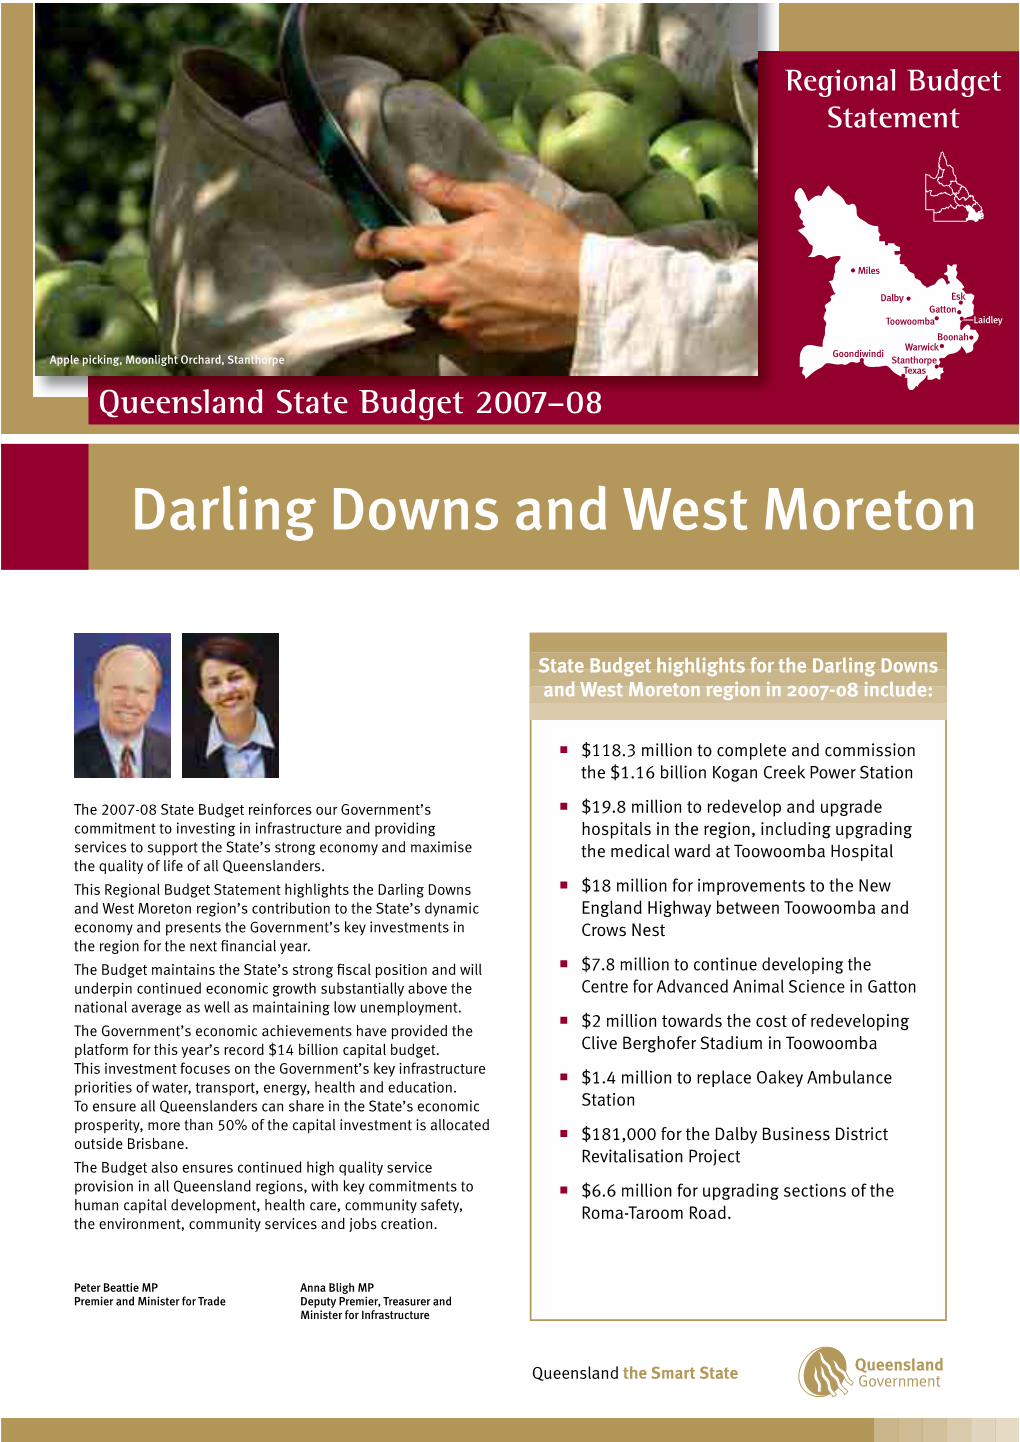 Darling Downs and West Moreton Regional